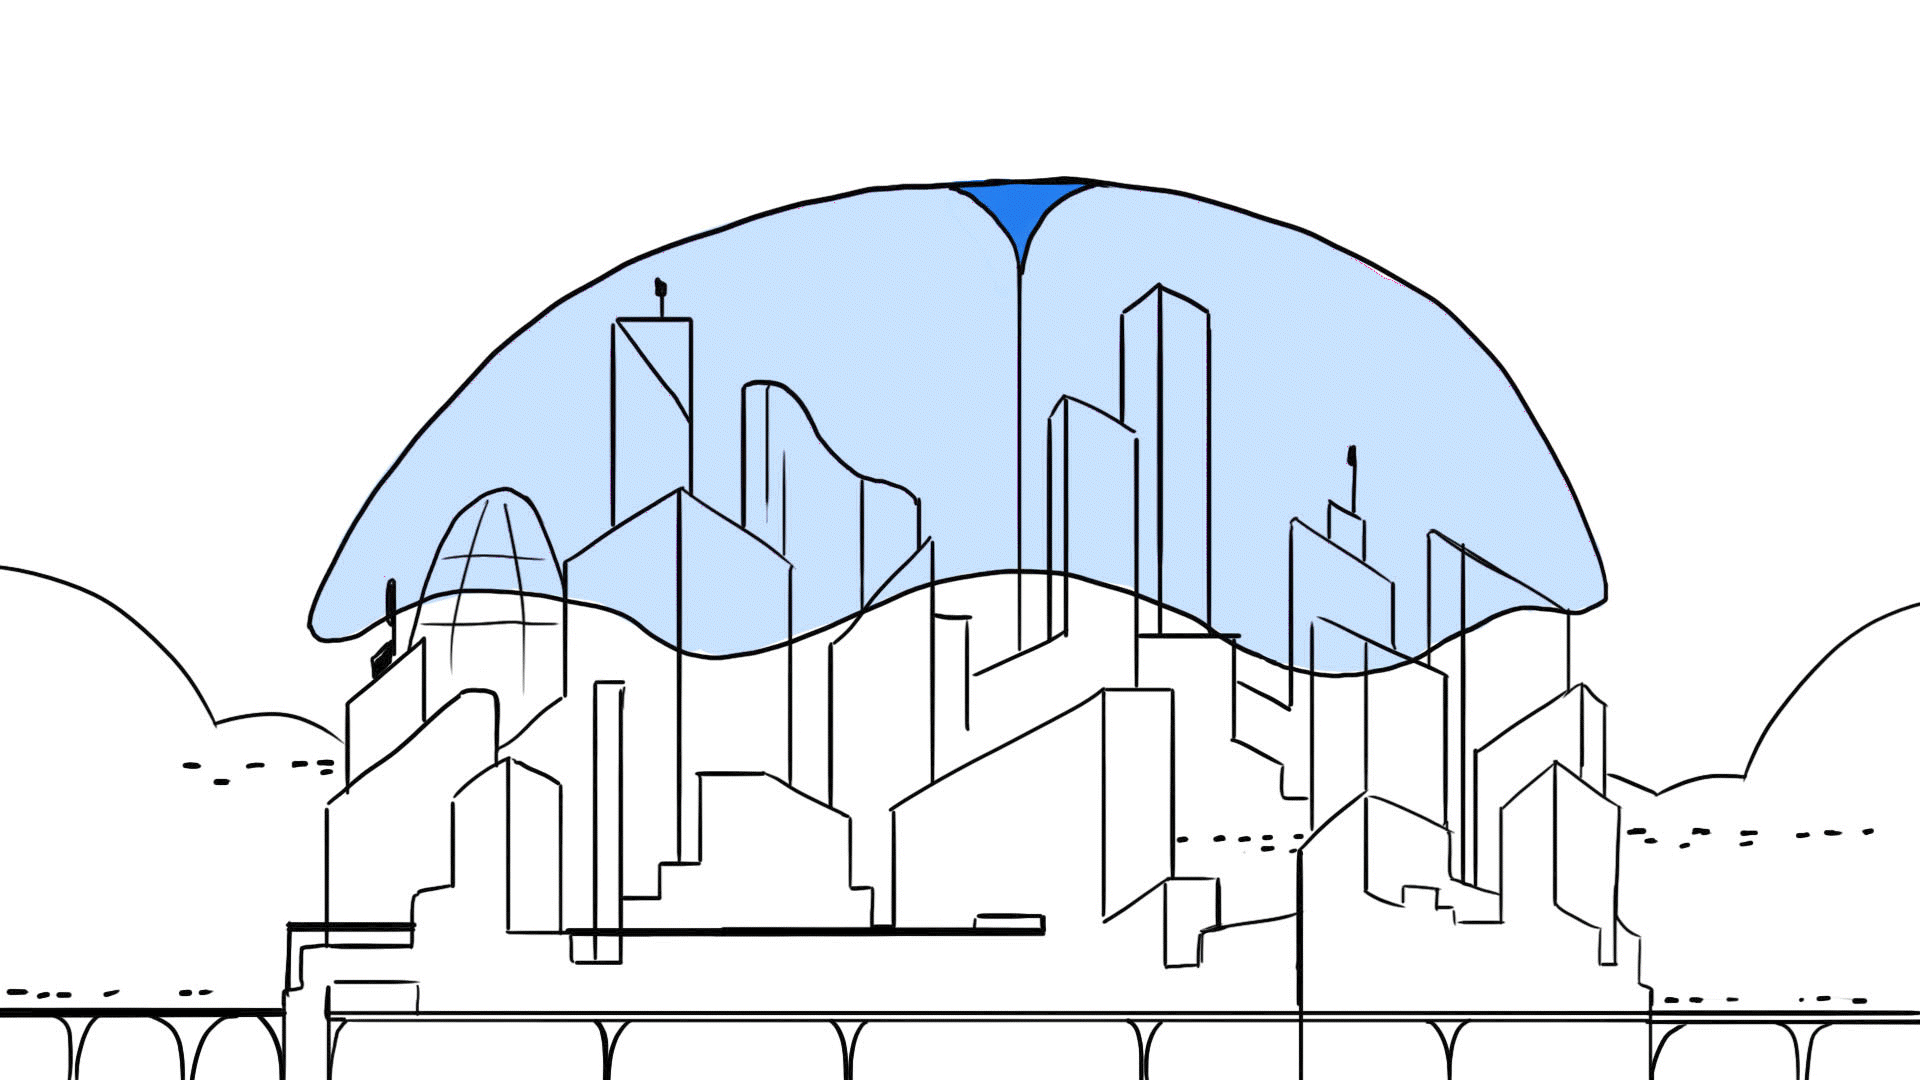 Evolution of the Bitdefender cityscape. 